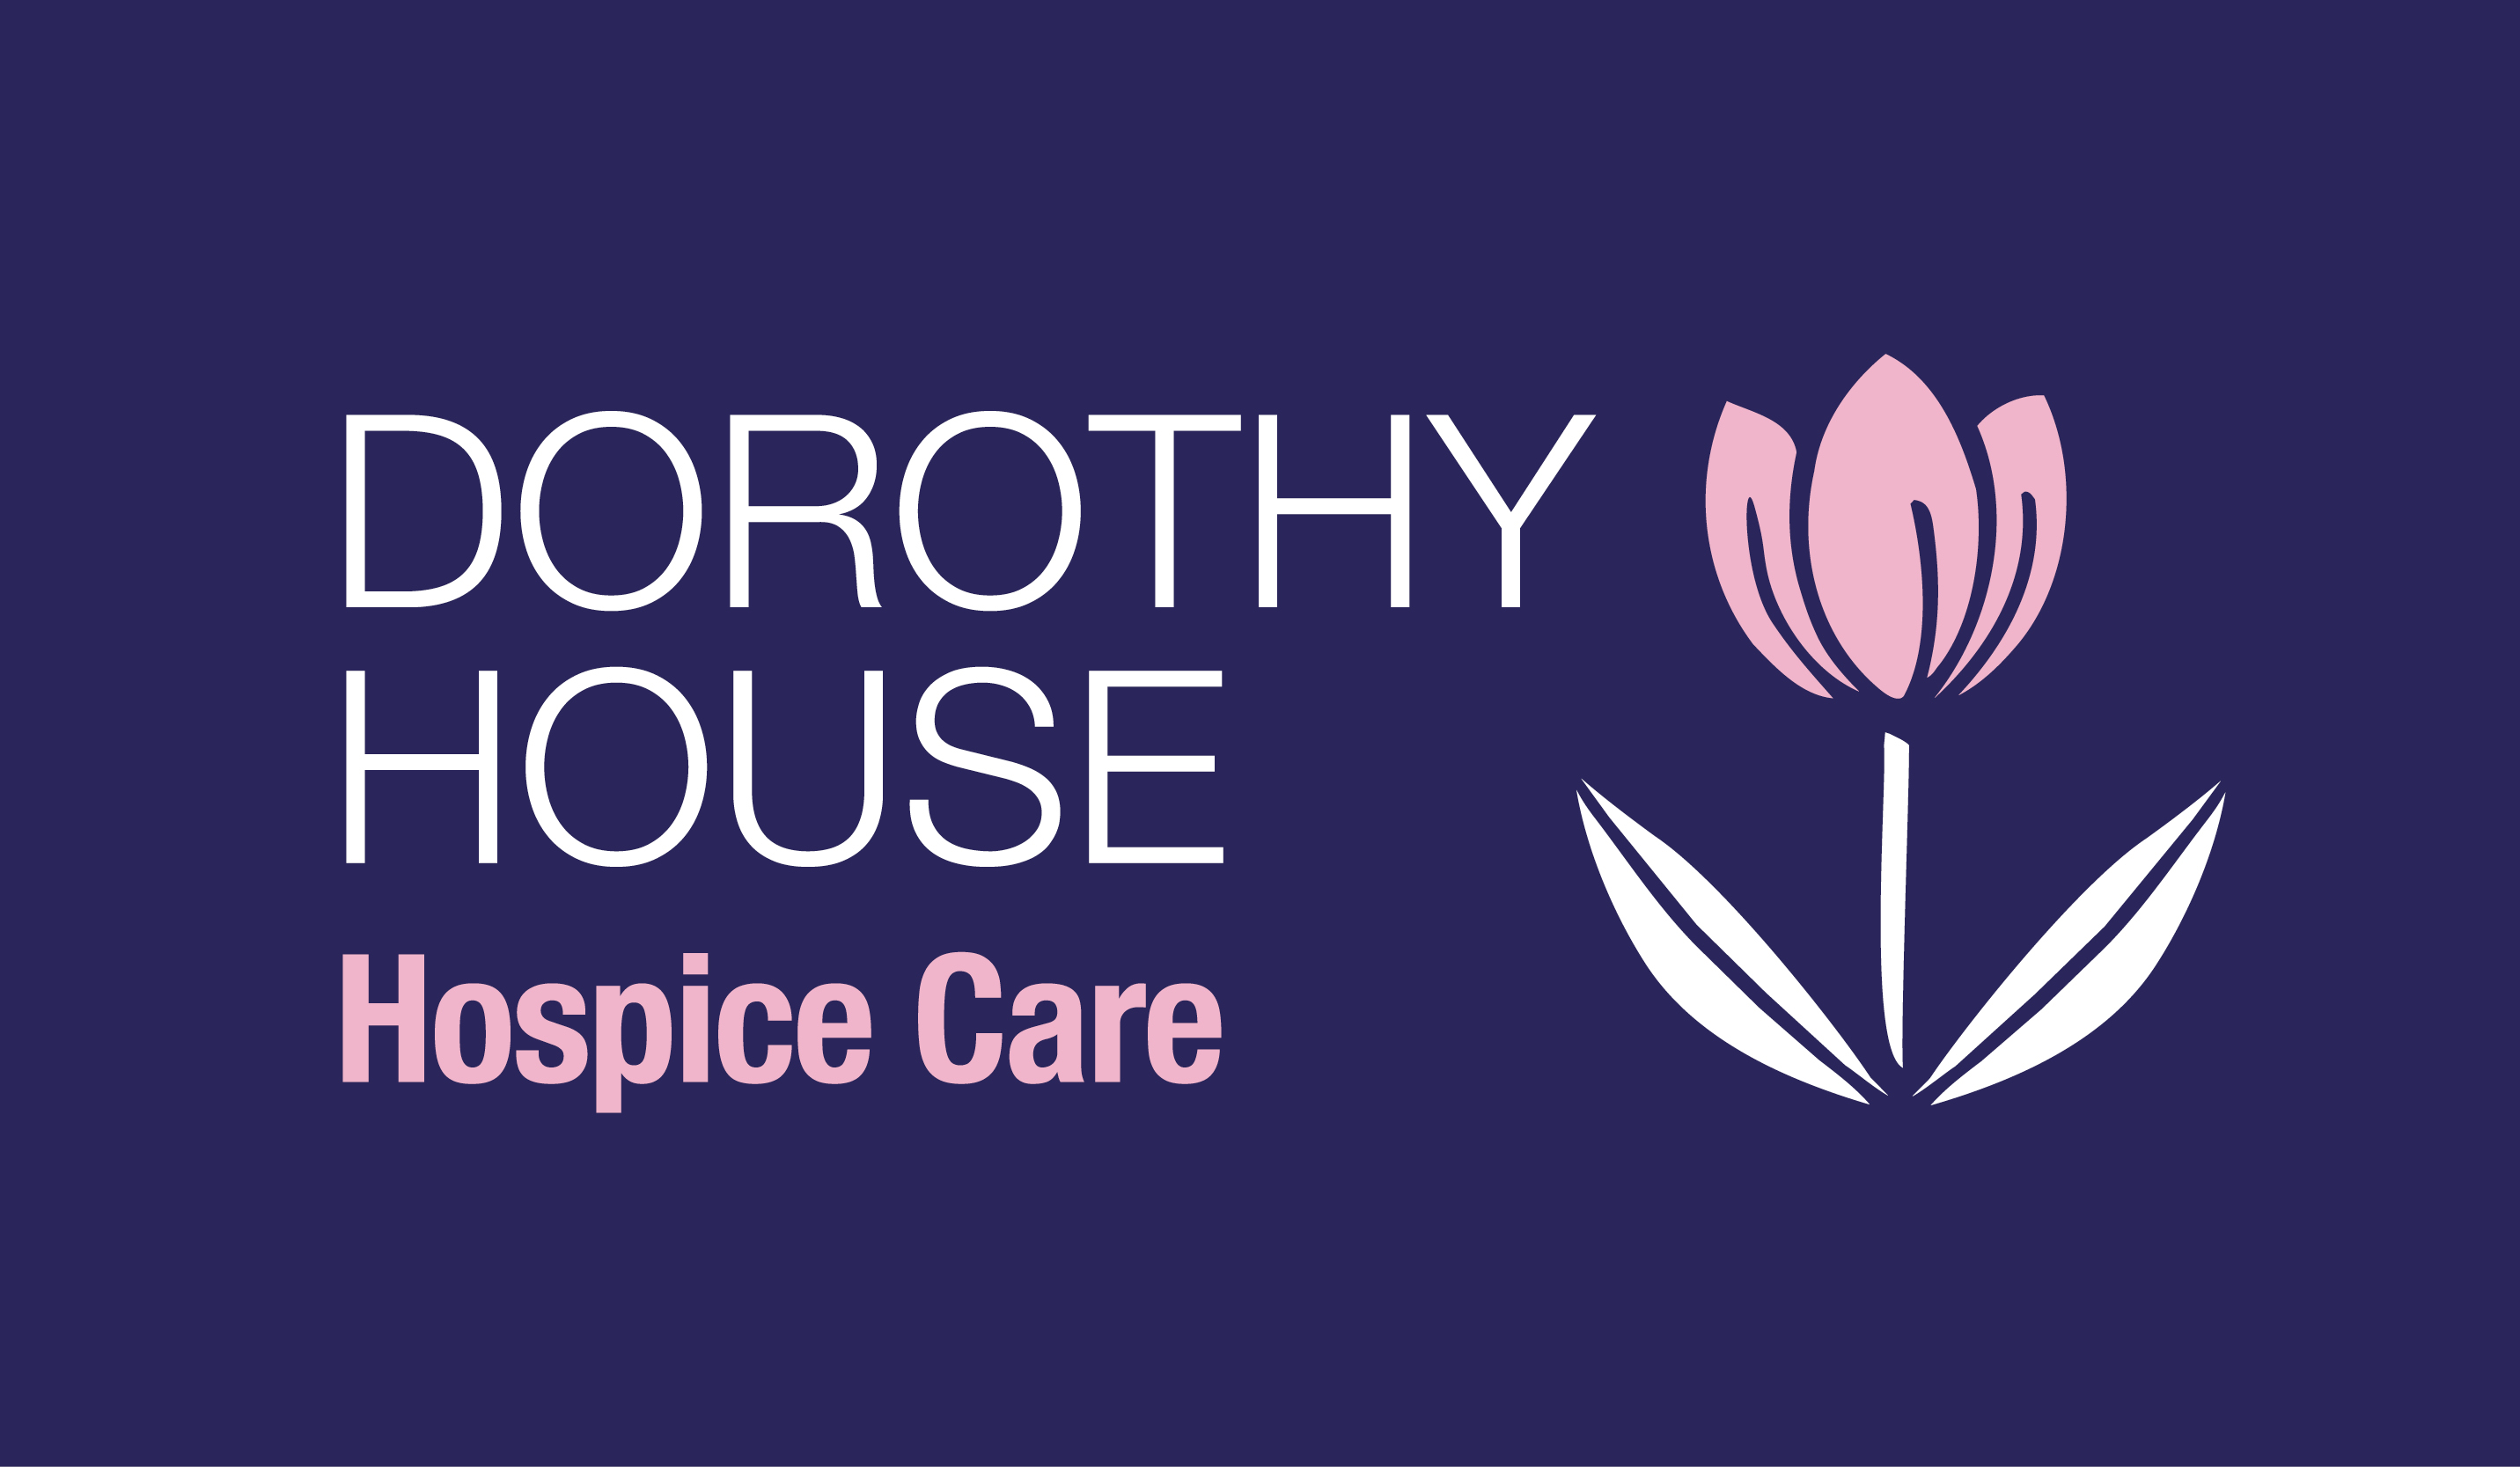 Supplier report card criteria for hospice